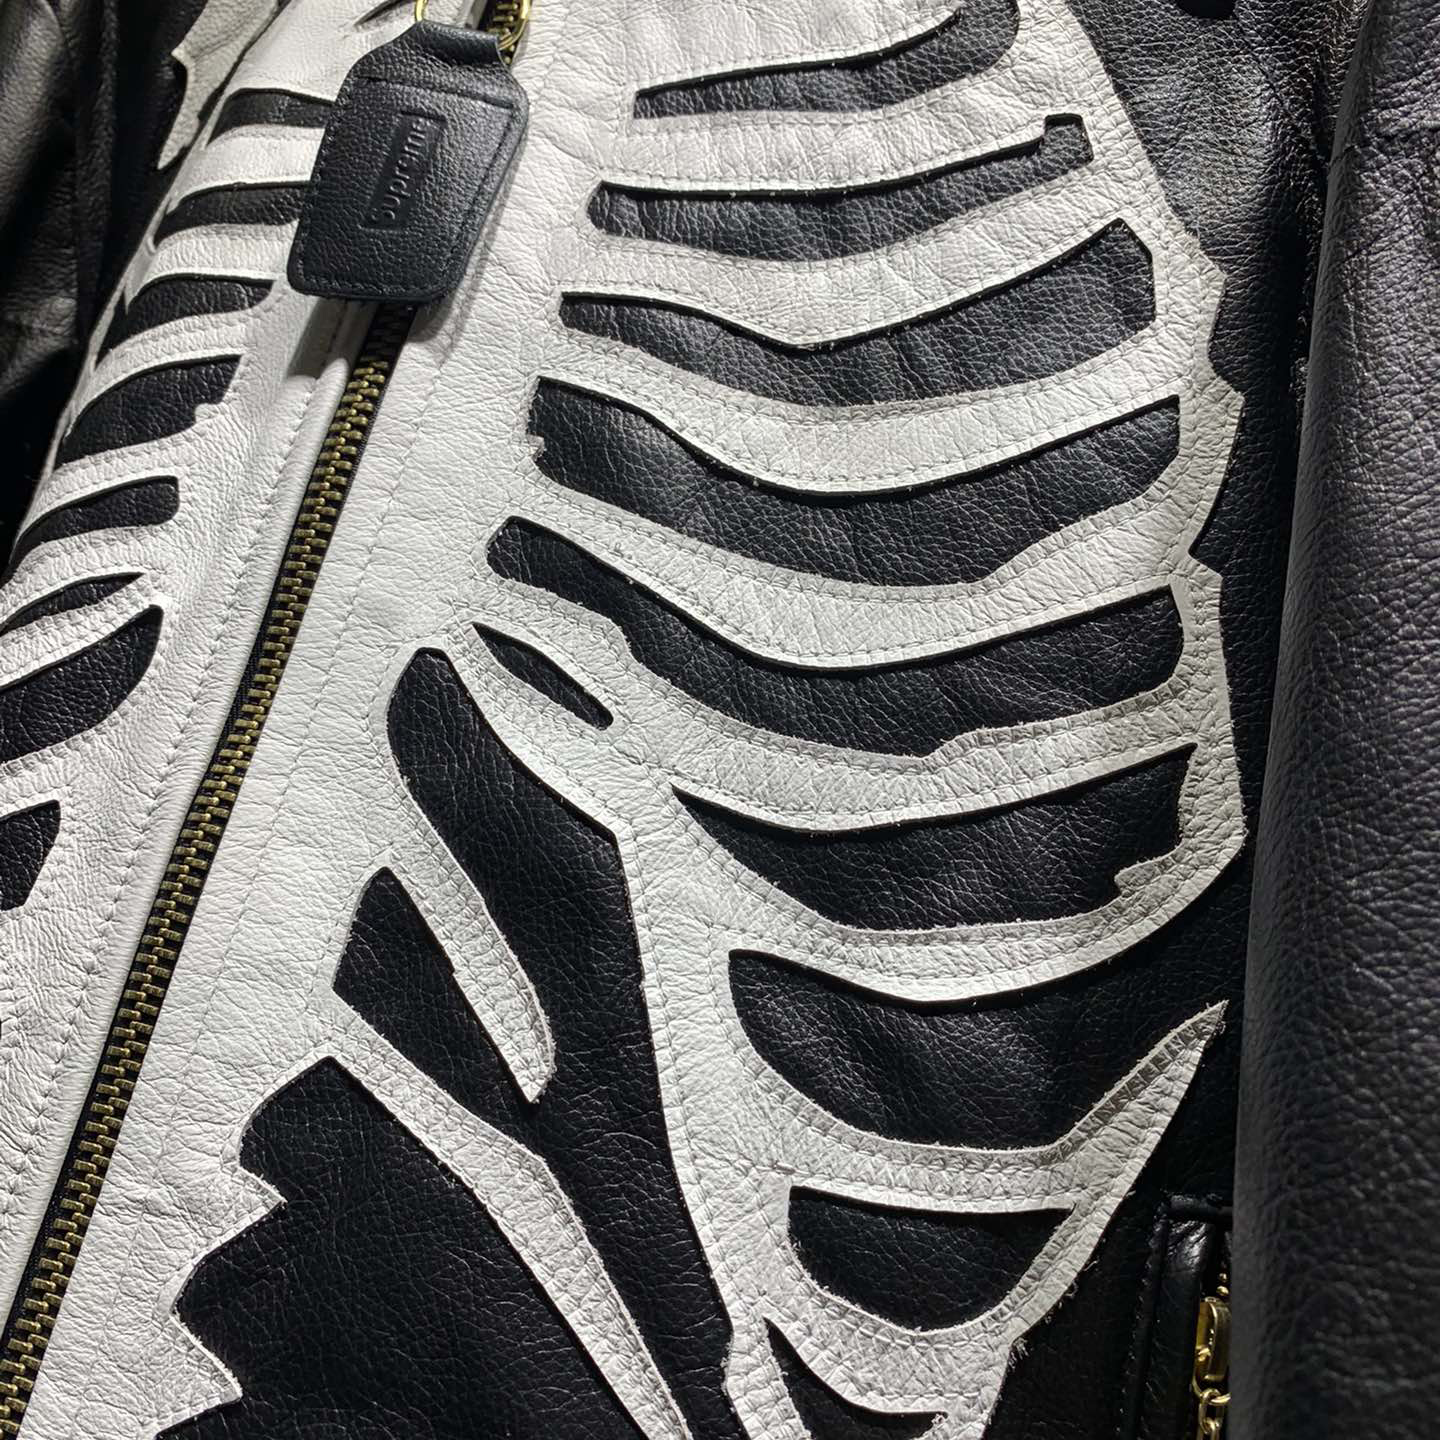 Supreme x Vanson Leather Jacket - DesignerGu